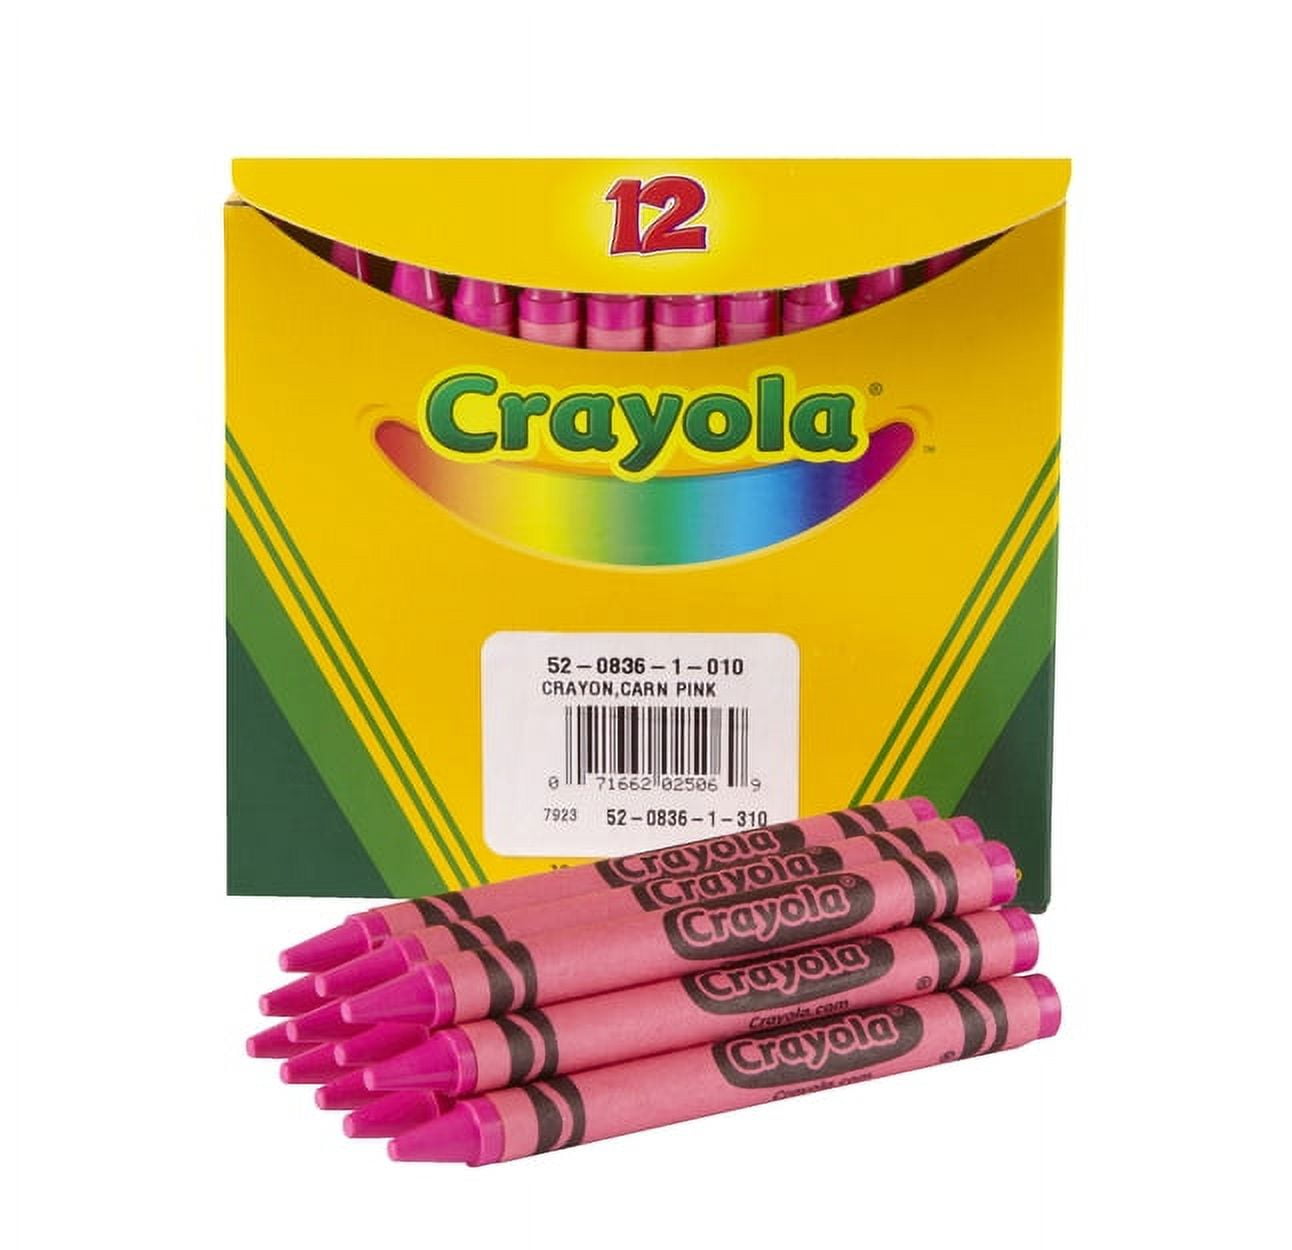 Dixon Lumber Crayon Pink Glo